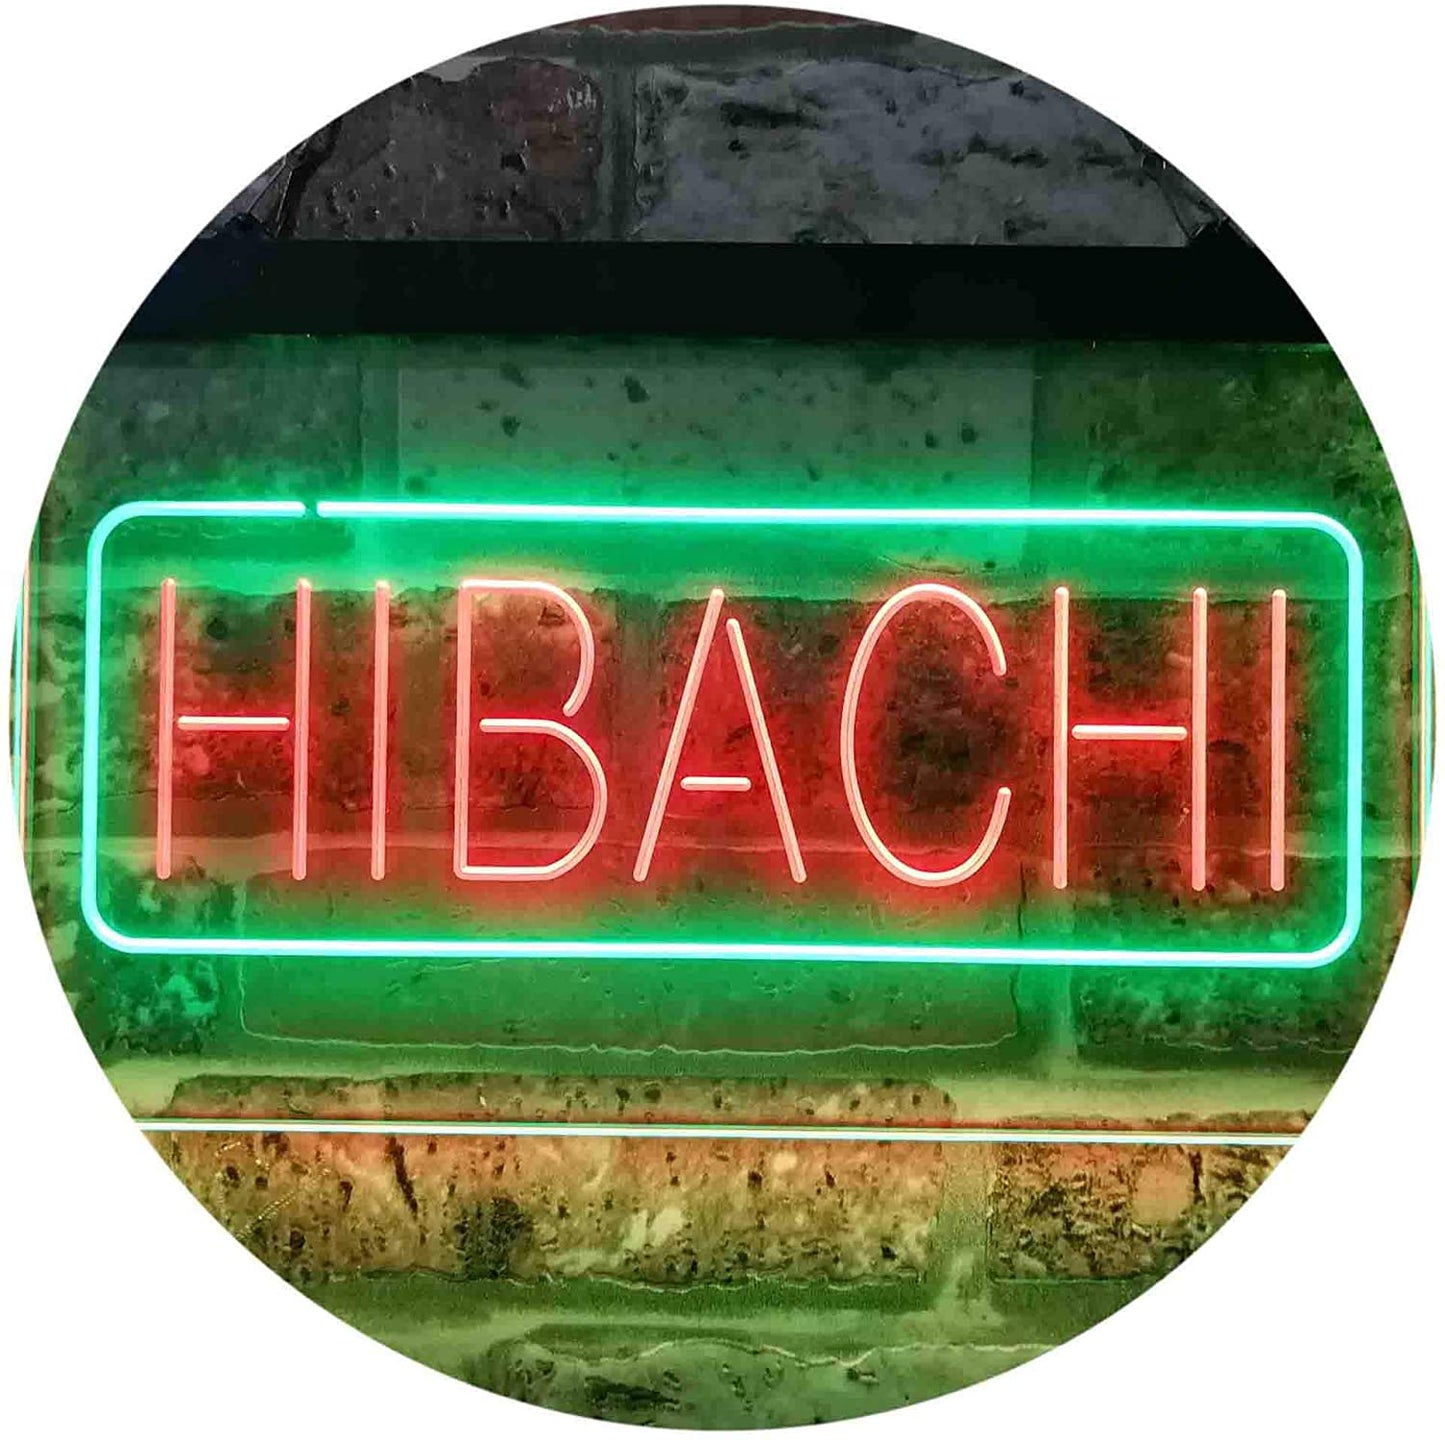 Japanese Food Hibachi LED Neon Light Sign - Way Up Gifts